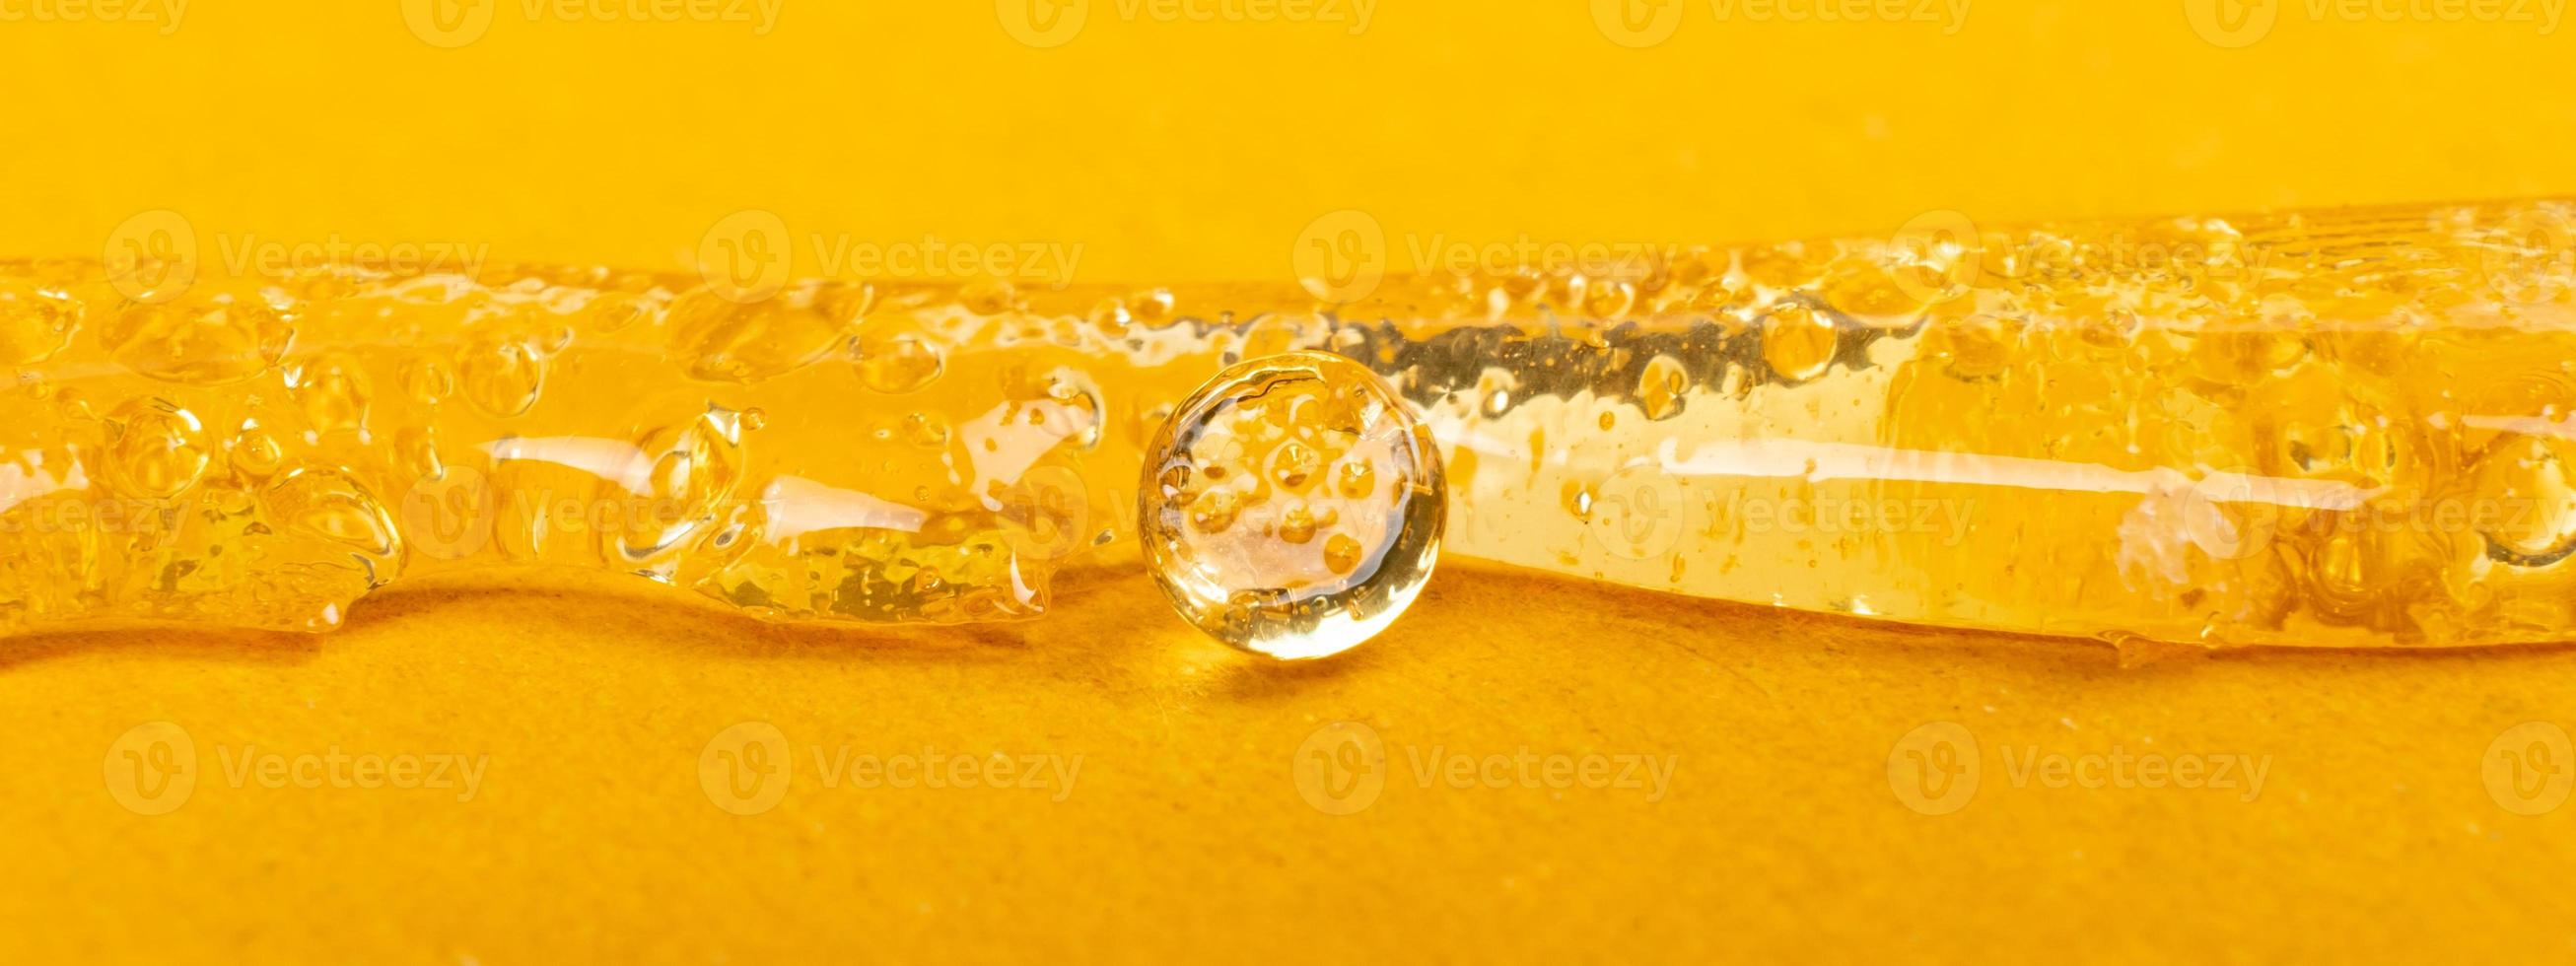 rent klart marijuanavax på gul bakgrund, cannabissprutstruktur foto